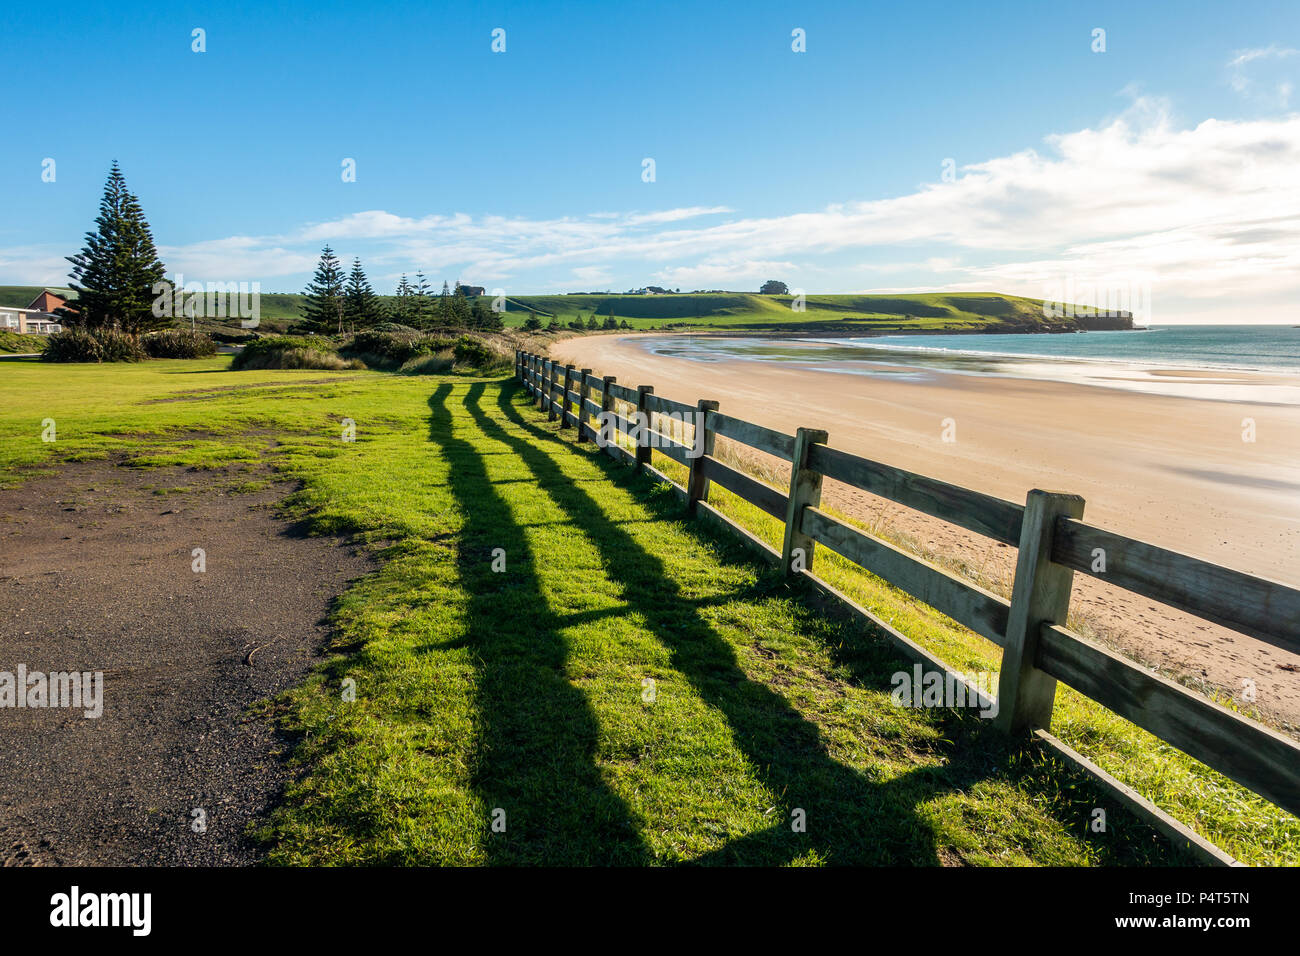 Kings Park and the beach in town of Stanley, Tasmania, Australia. Stock Photo